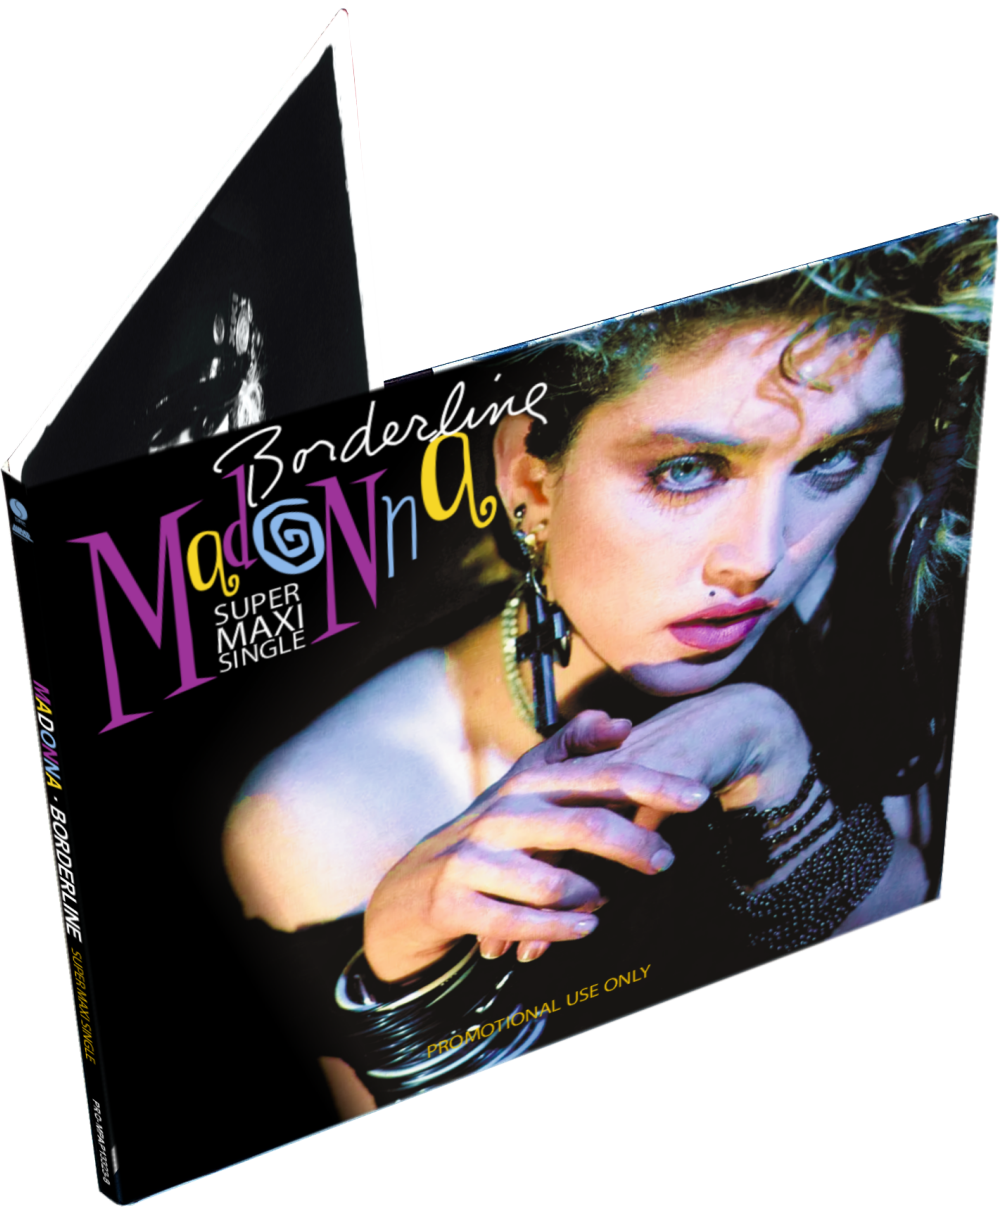 MadonnaUnusualMPAP [v.2.0]: Madonna - Borderline Super Maxi Single